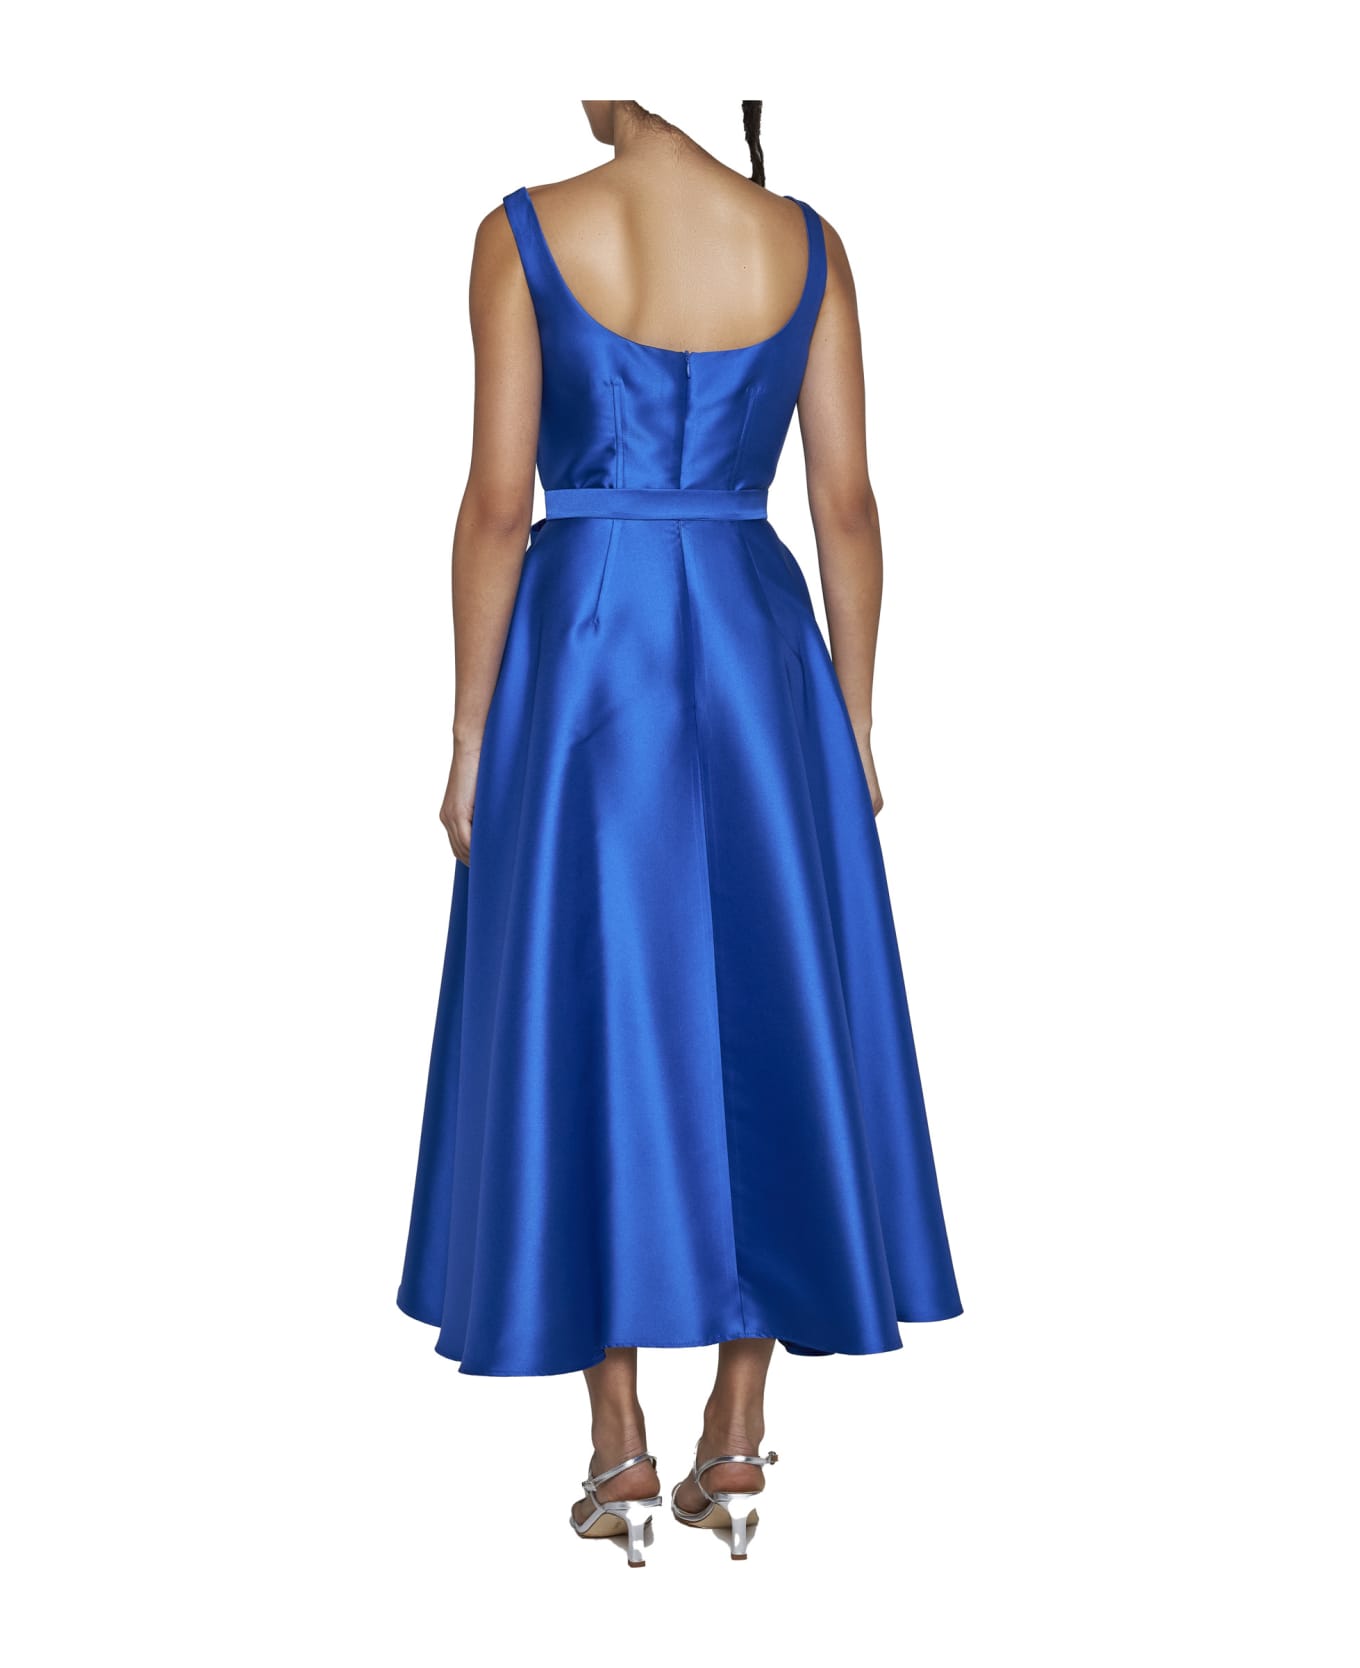 Blanca Vita Dress - Blue